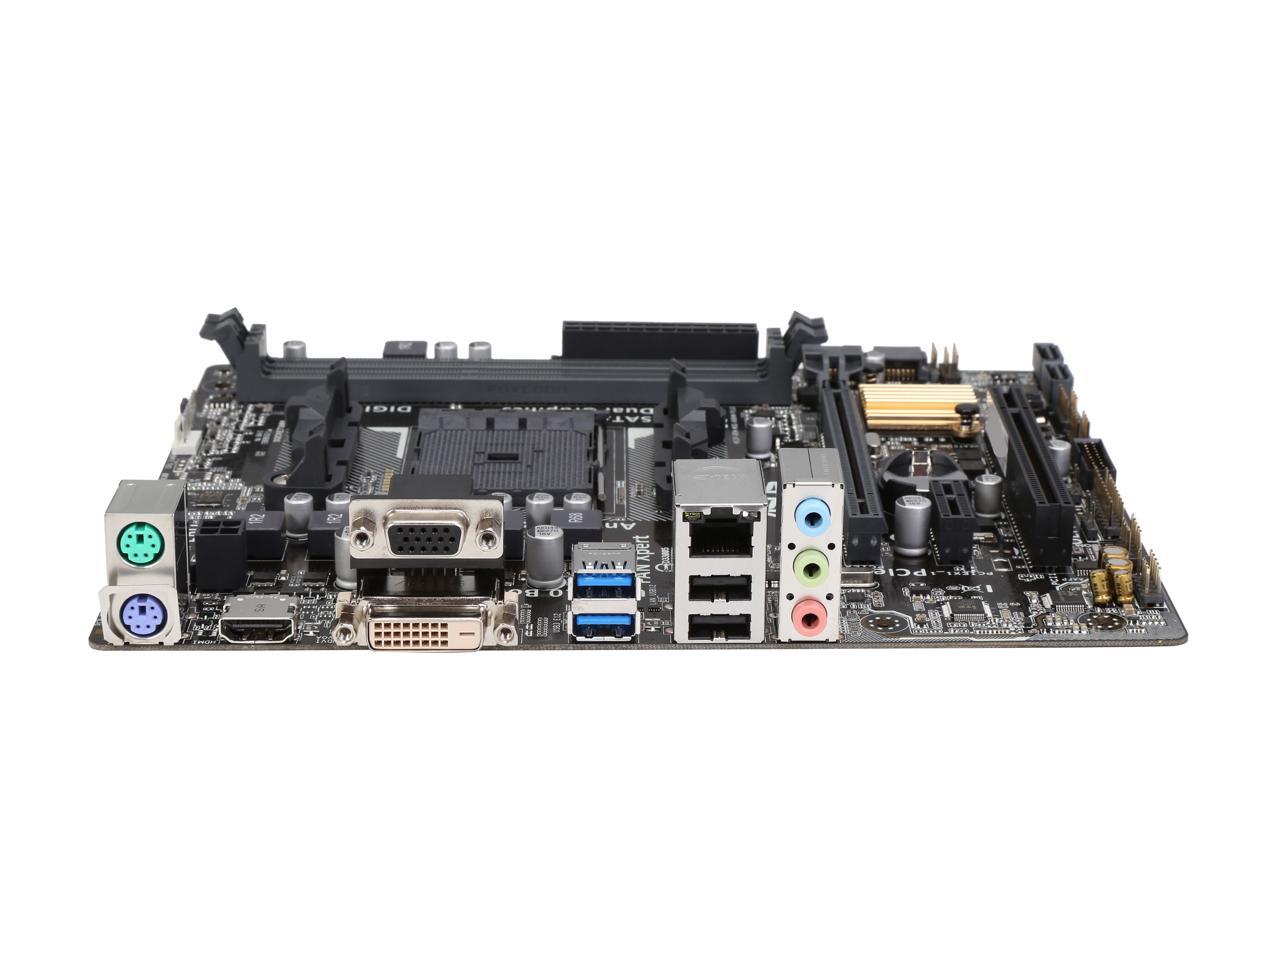 ASUS A68HM-Plus FM2+ AMD A68H FCH (Bolton D2H) SATA 6Gb/s USB 3.0 HDMI Micro ATX AMD Motherboard